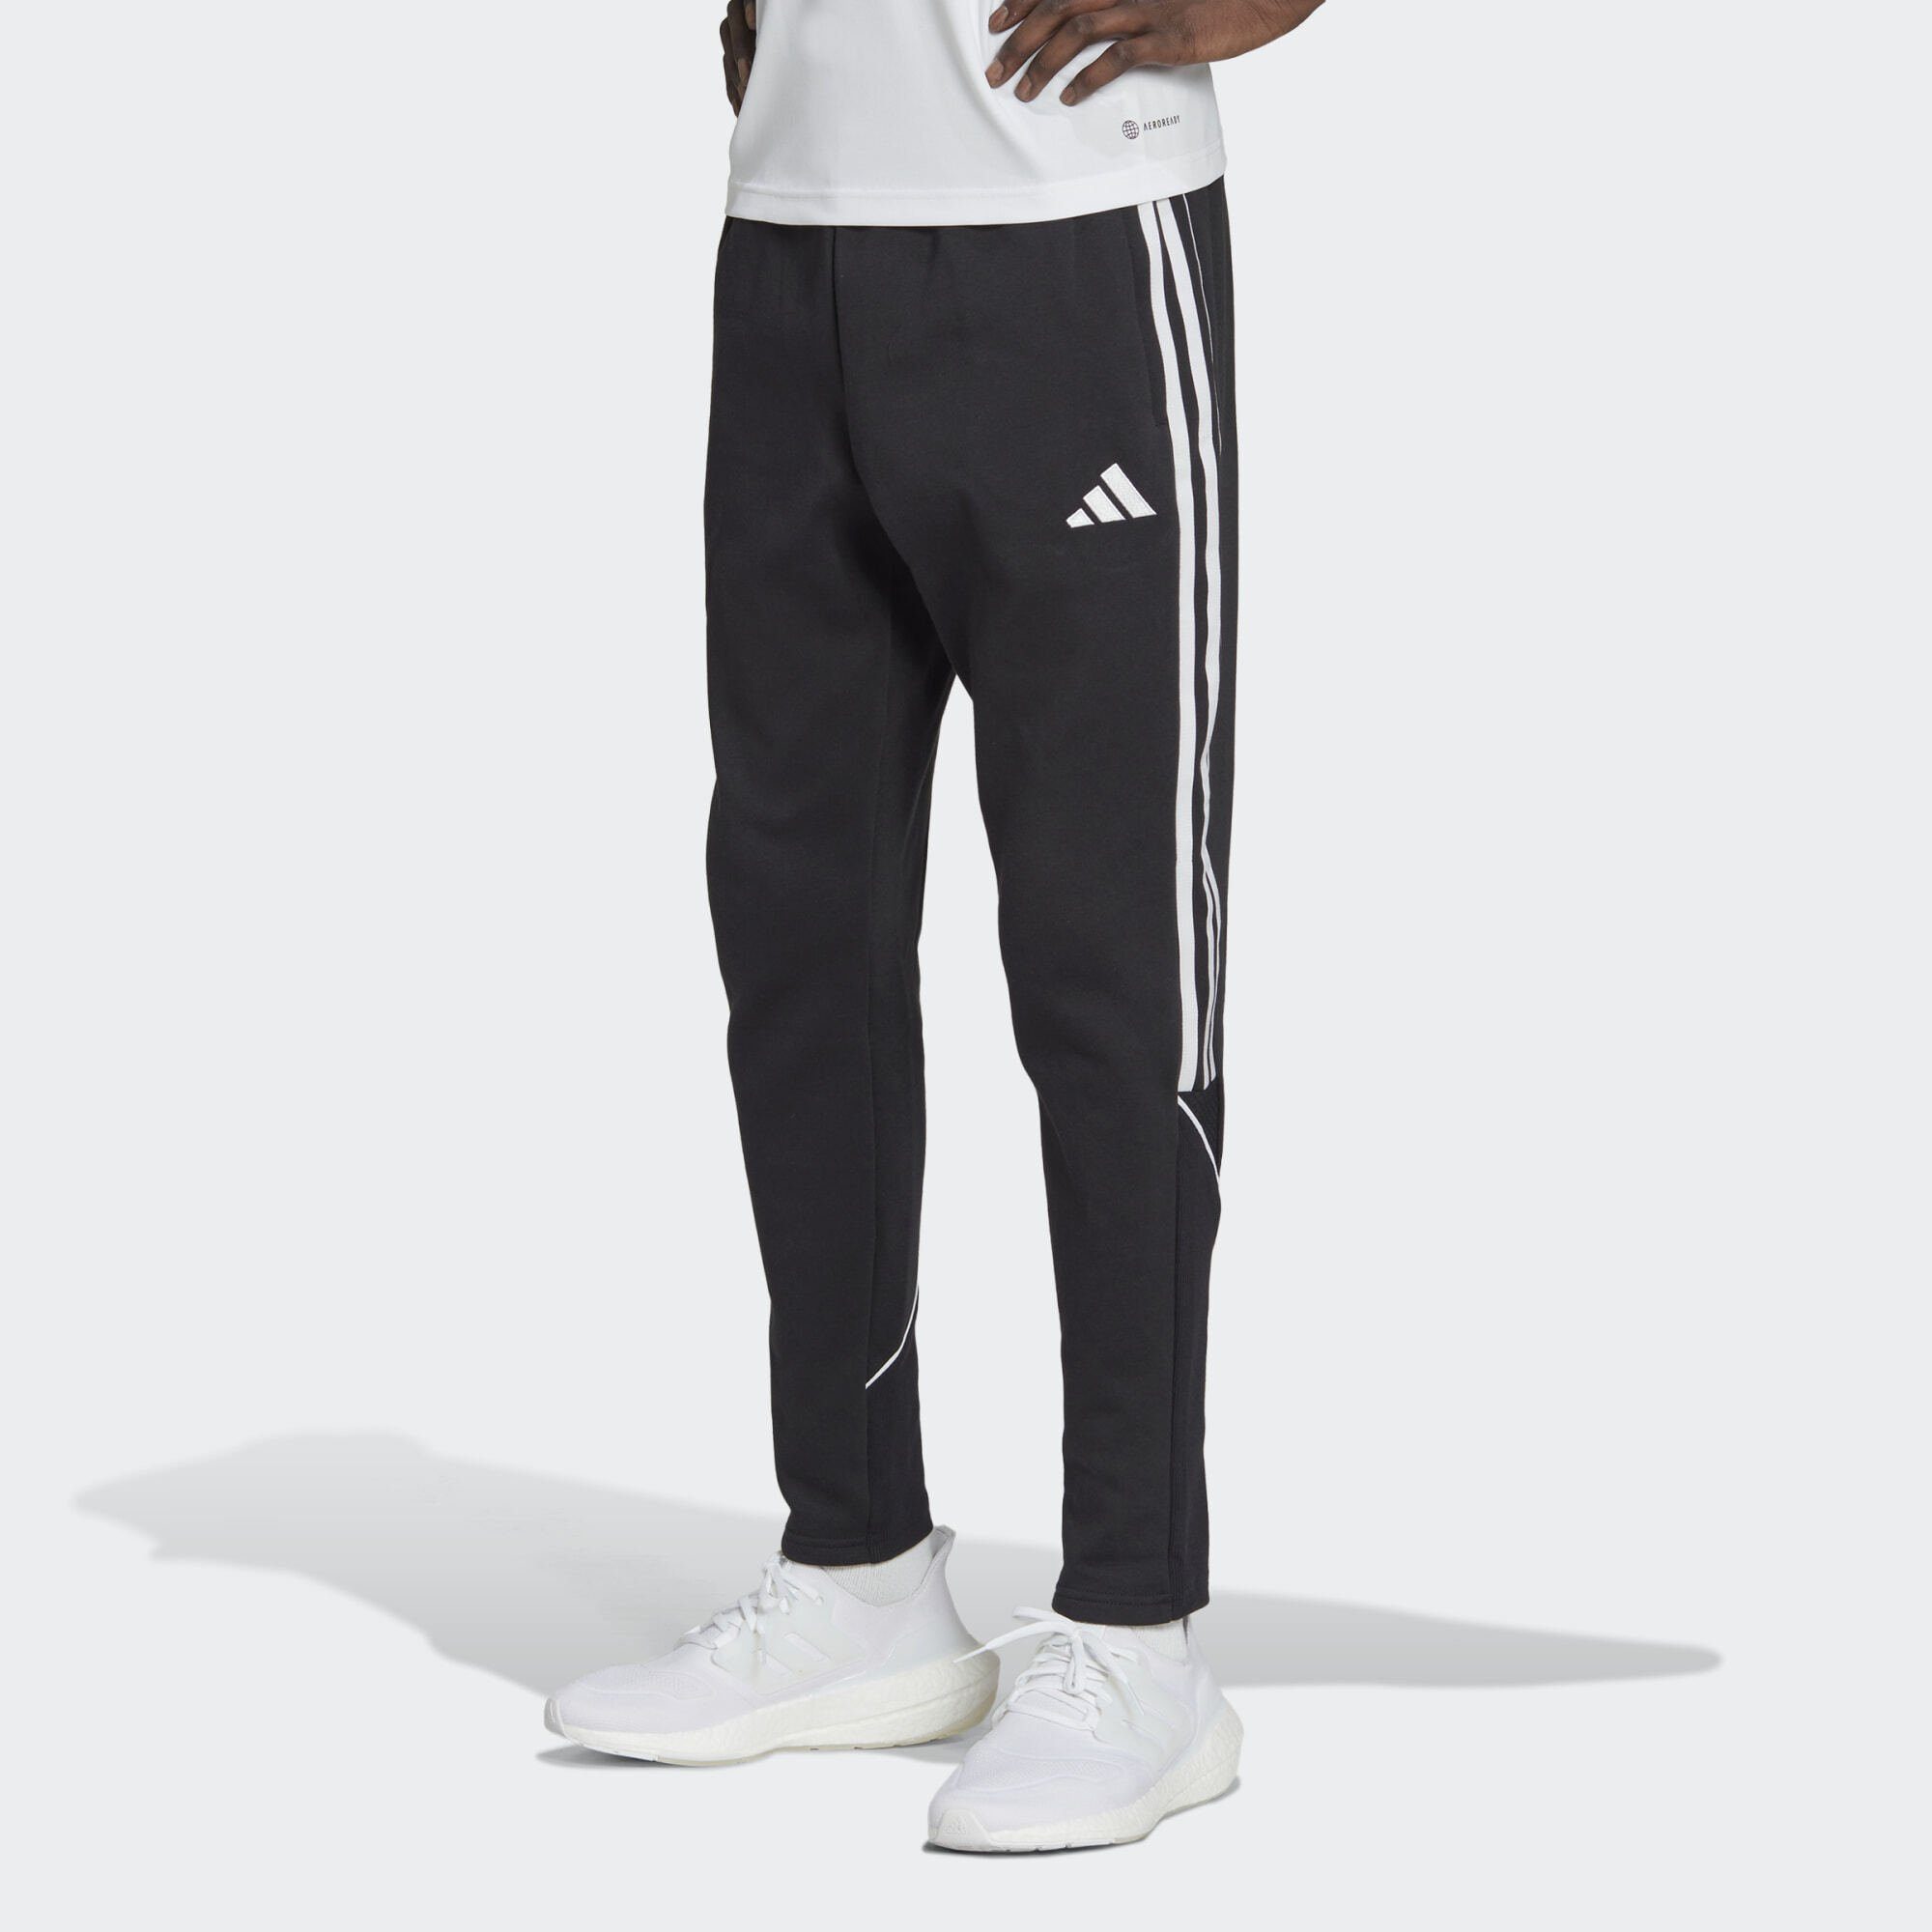 JOGGINGHOSE Leichtathletik-Hose adidas TIRO Performance Black 23 LEAGUE